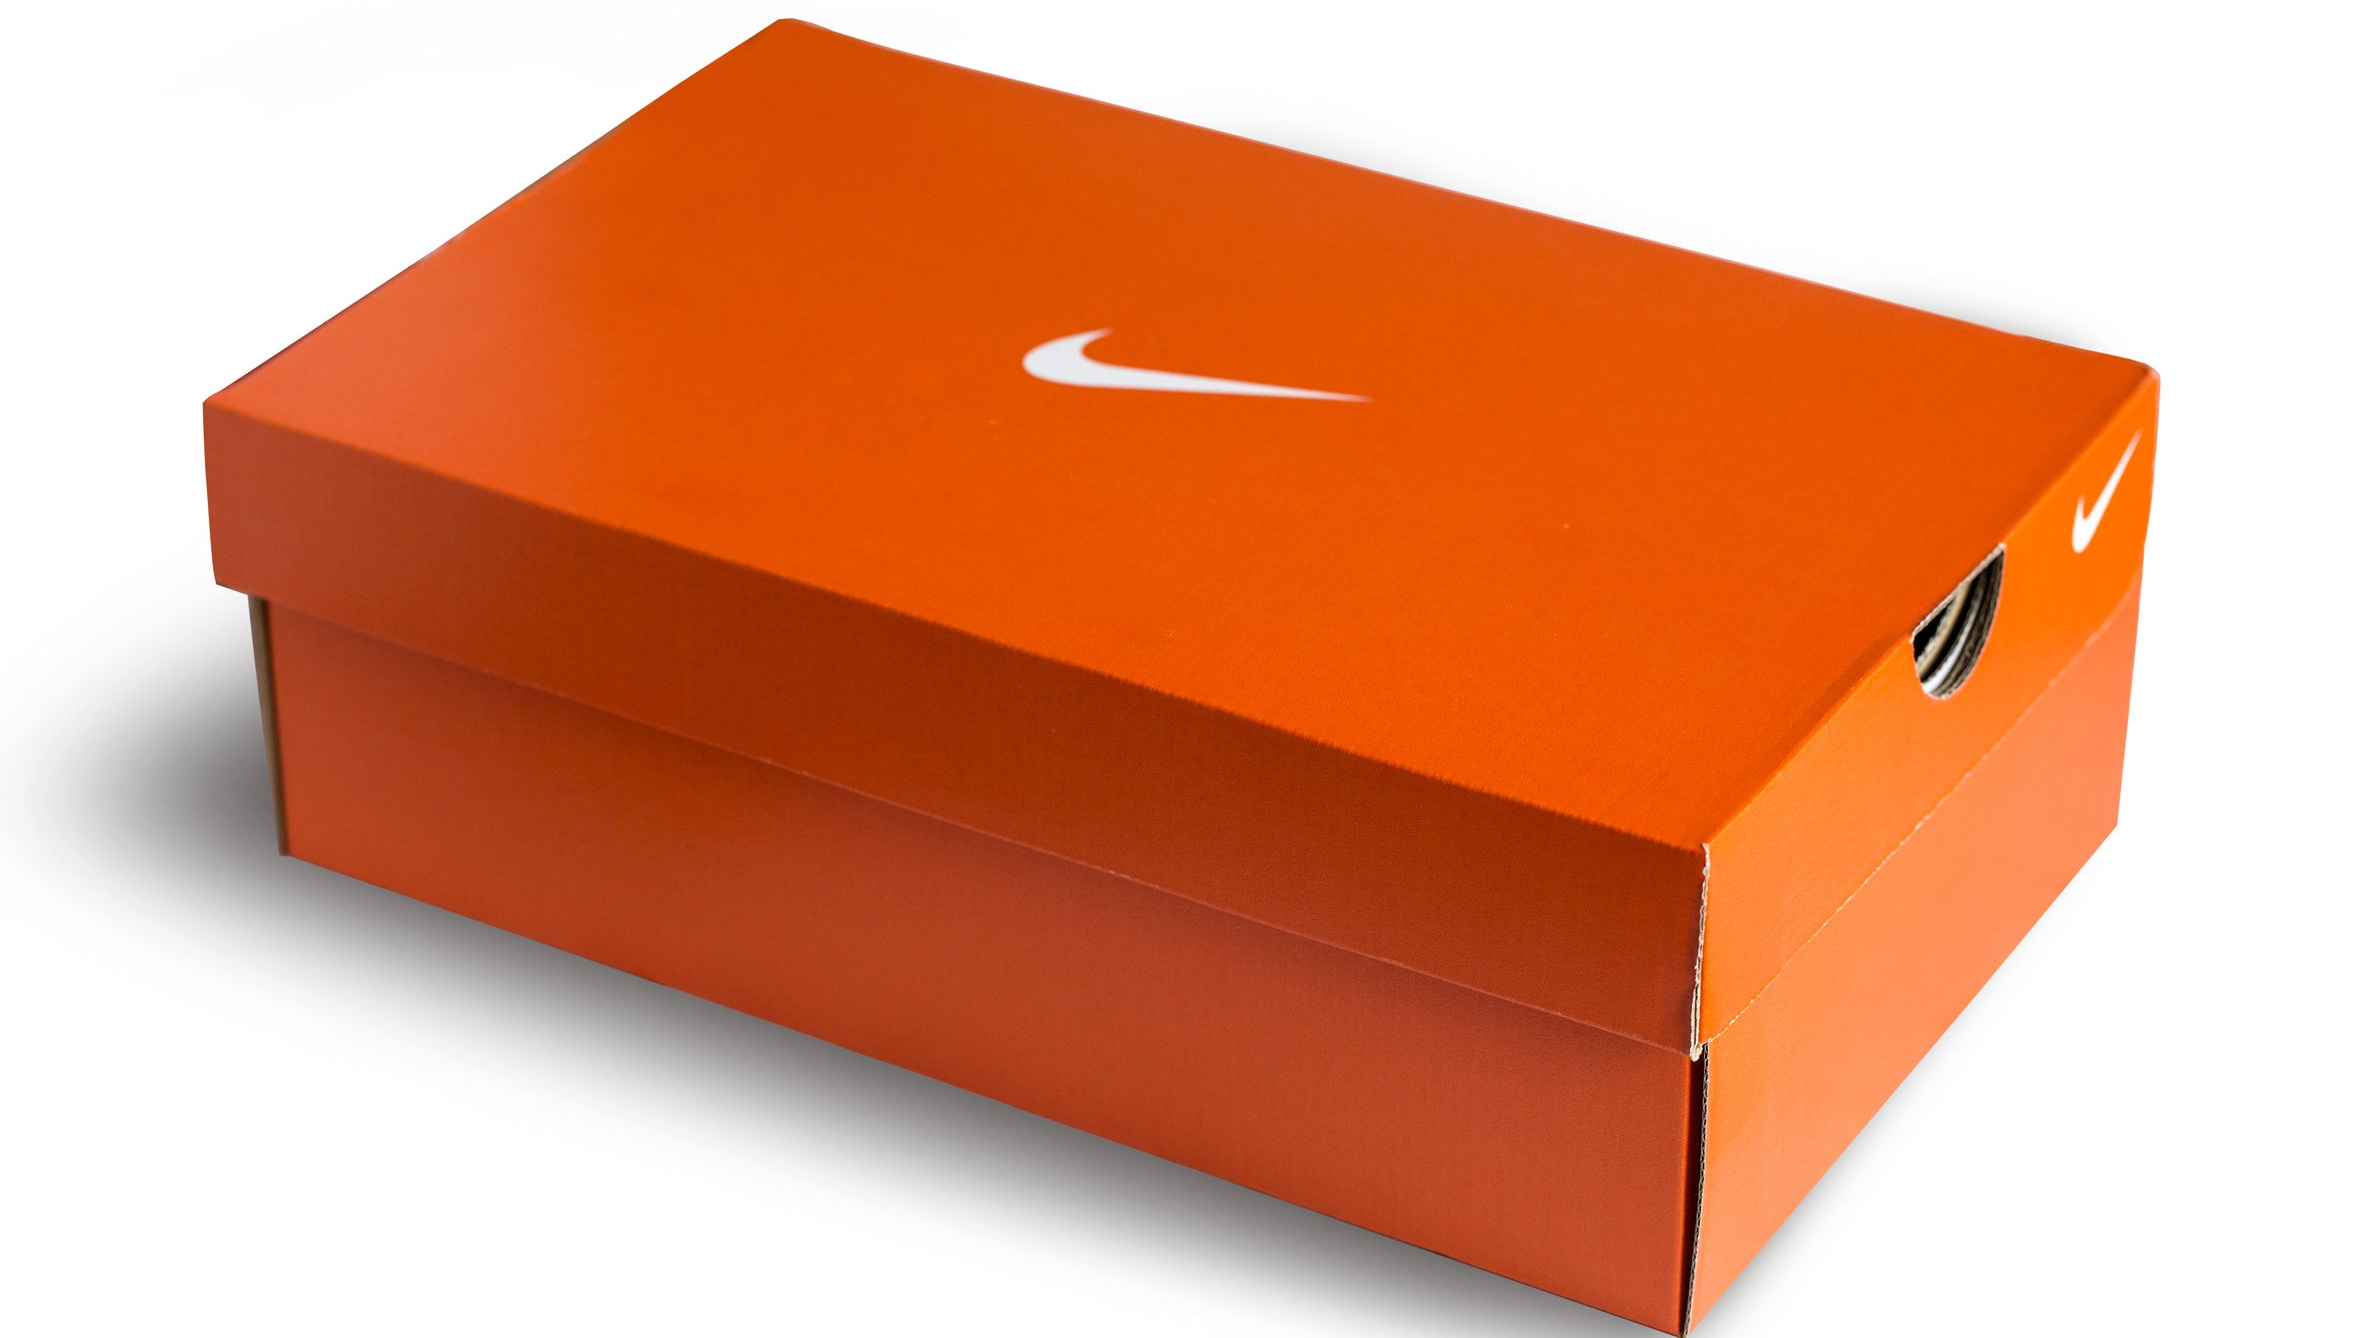 ‘Nike verkoopt binnenkort direct op Amazon’